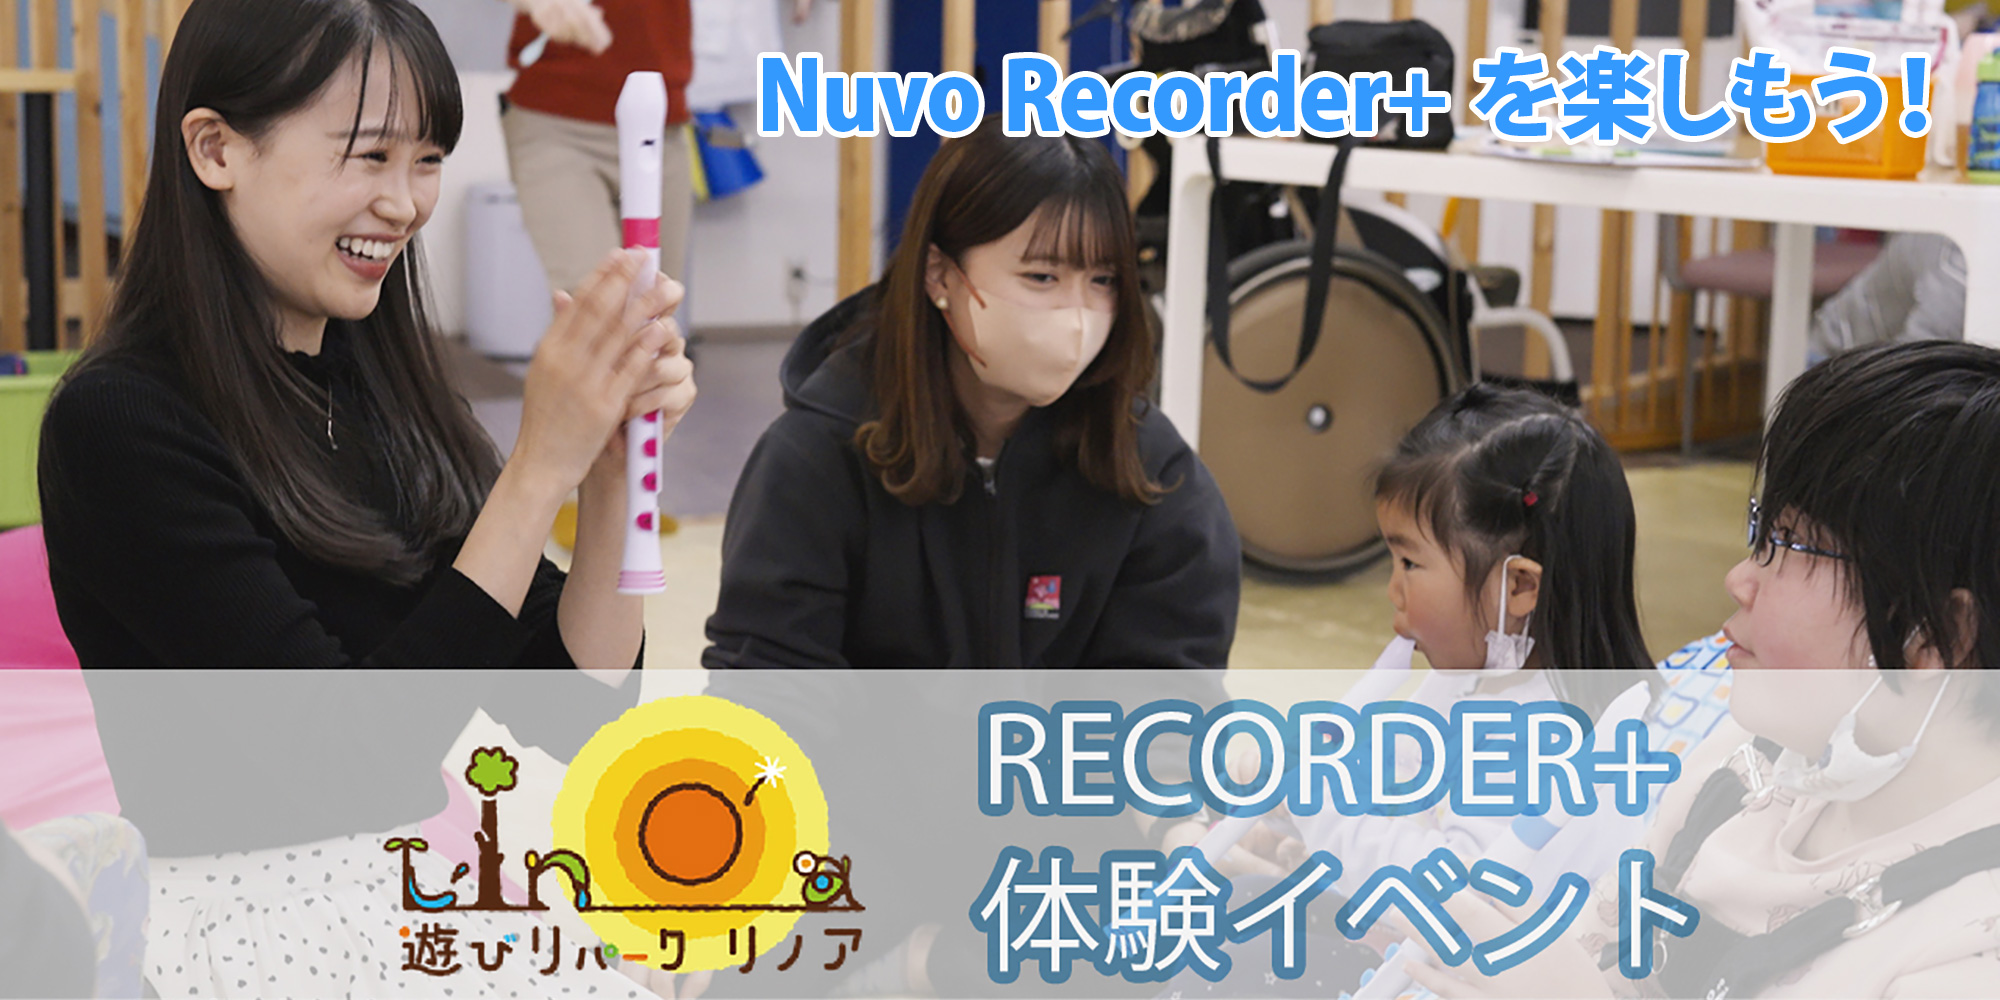 Nuvo Recorder+ を楽しもう！